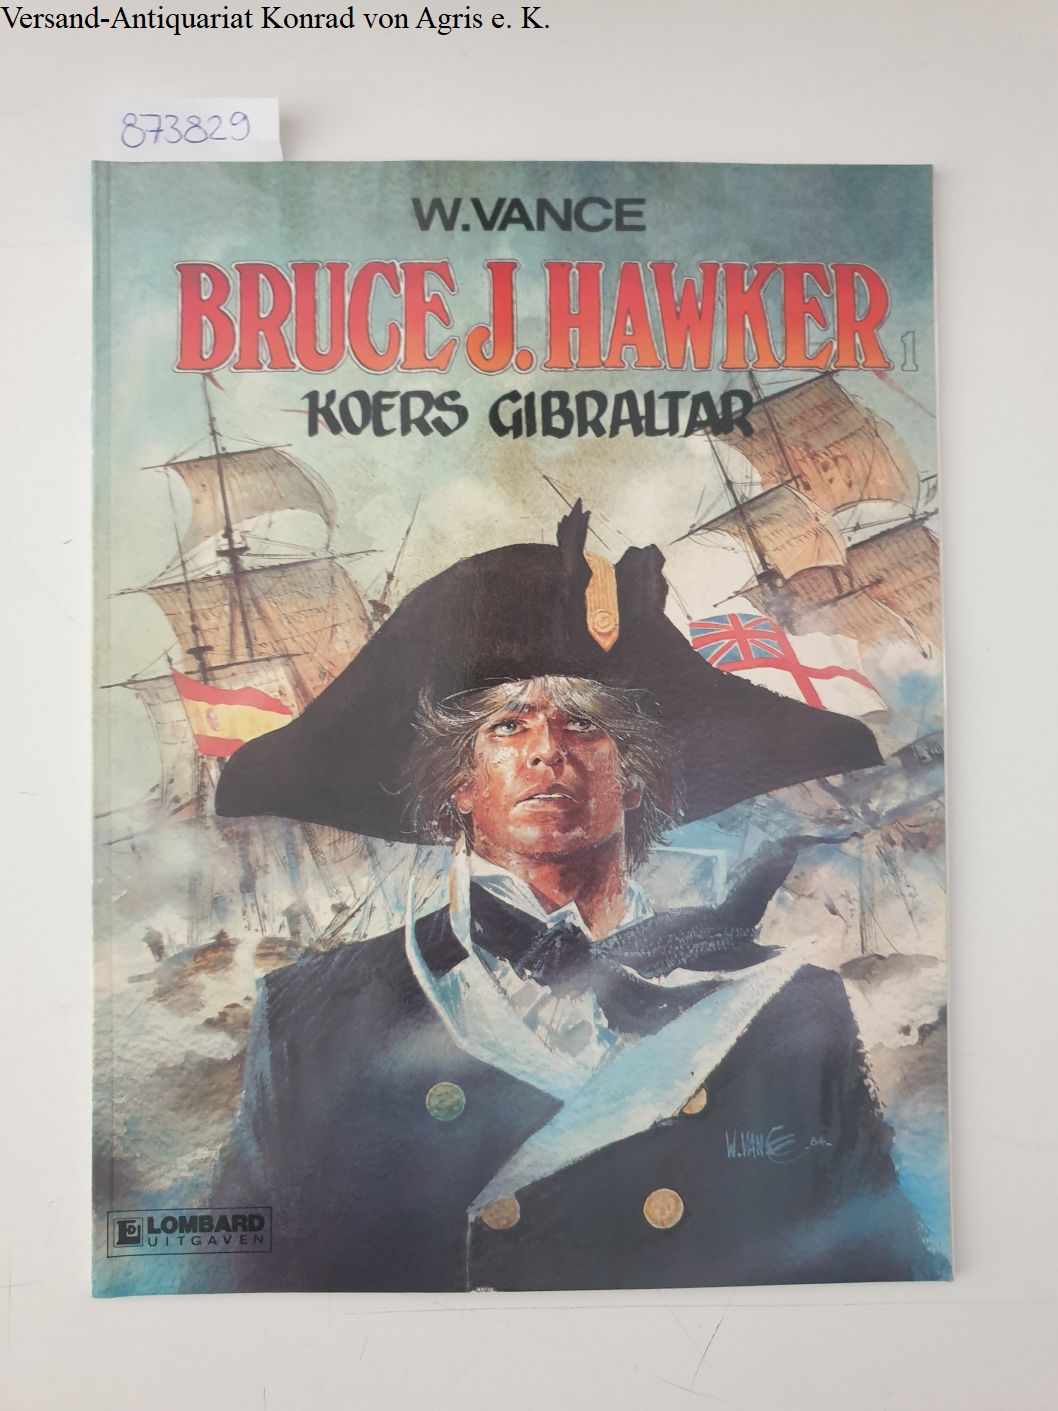 Bruce J. Hawker: Koers Gibraltar: - Vance, William